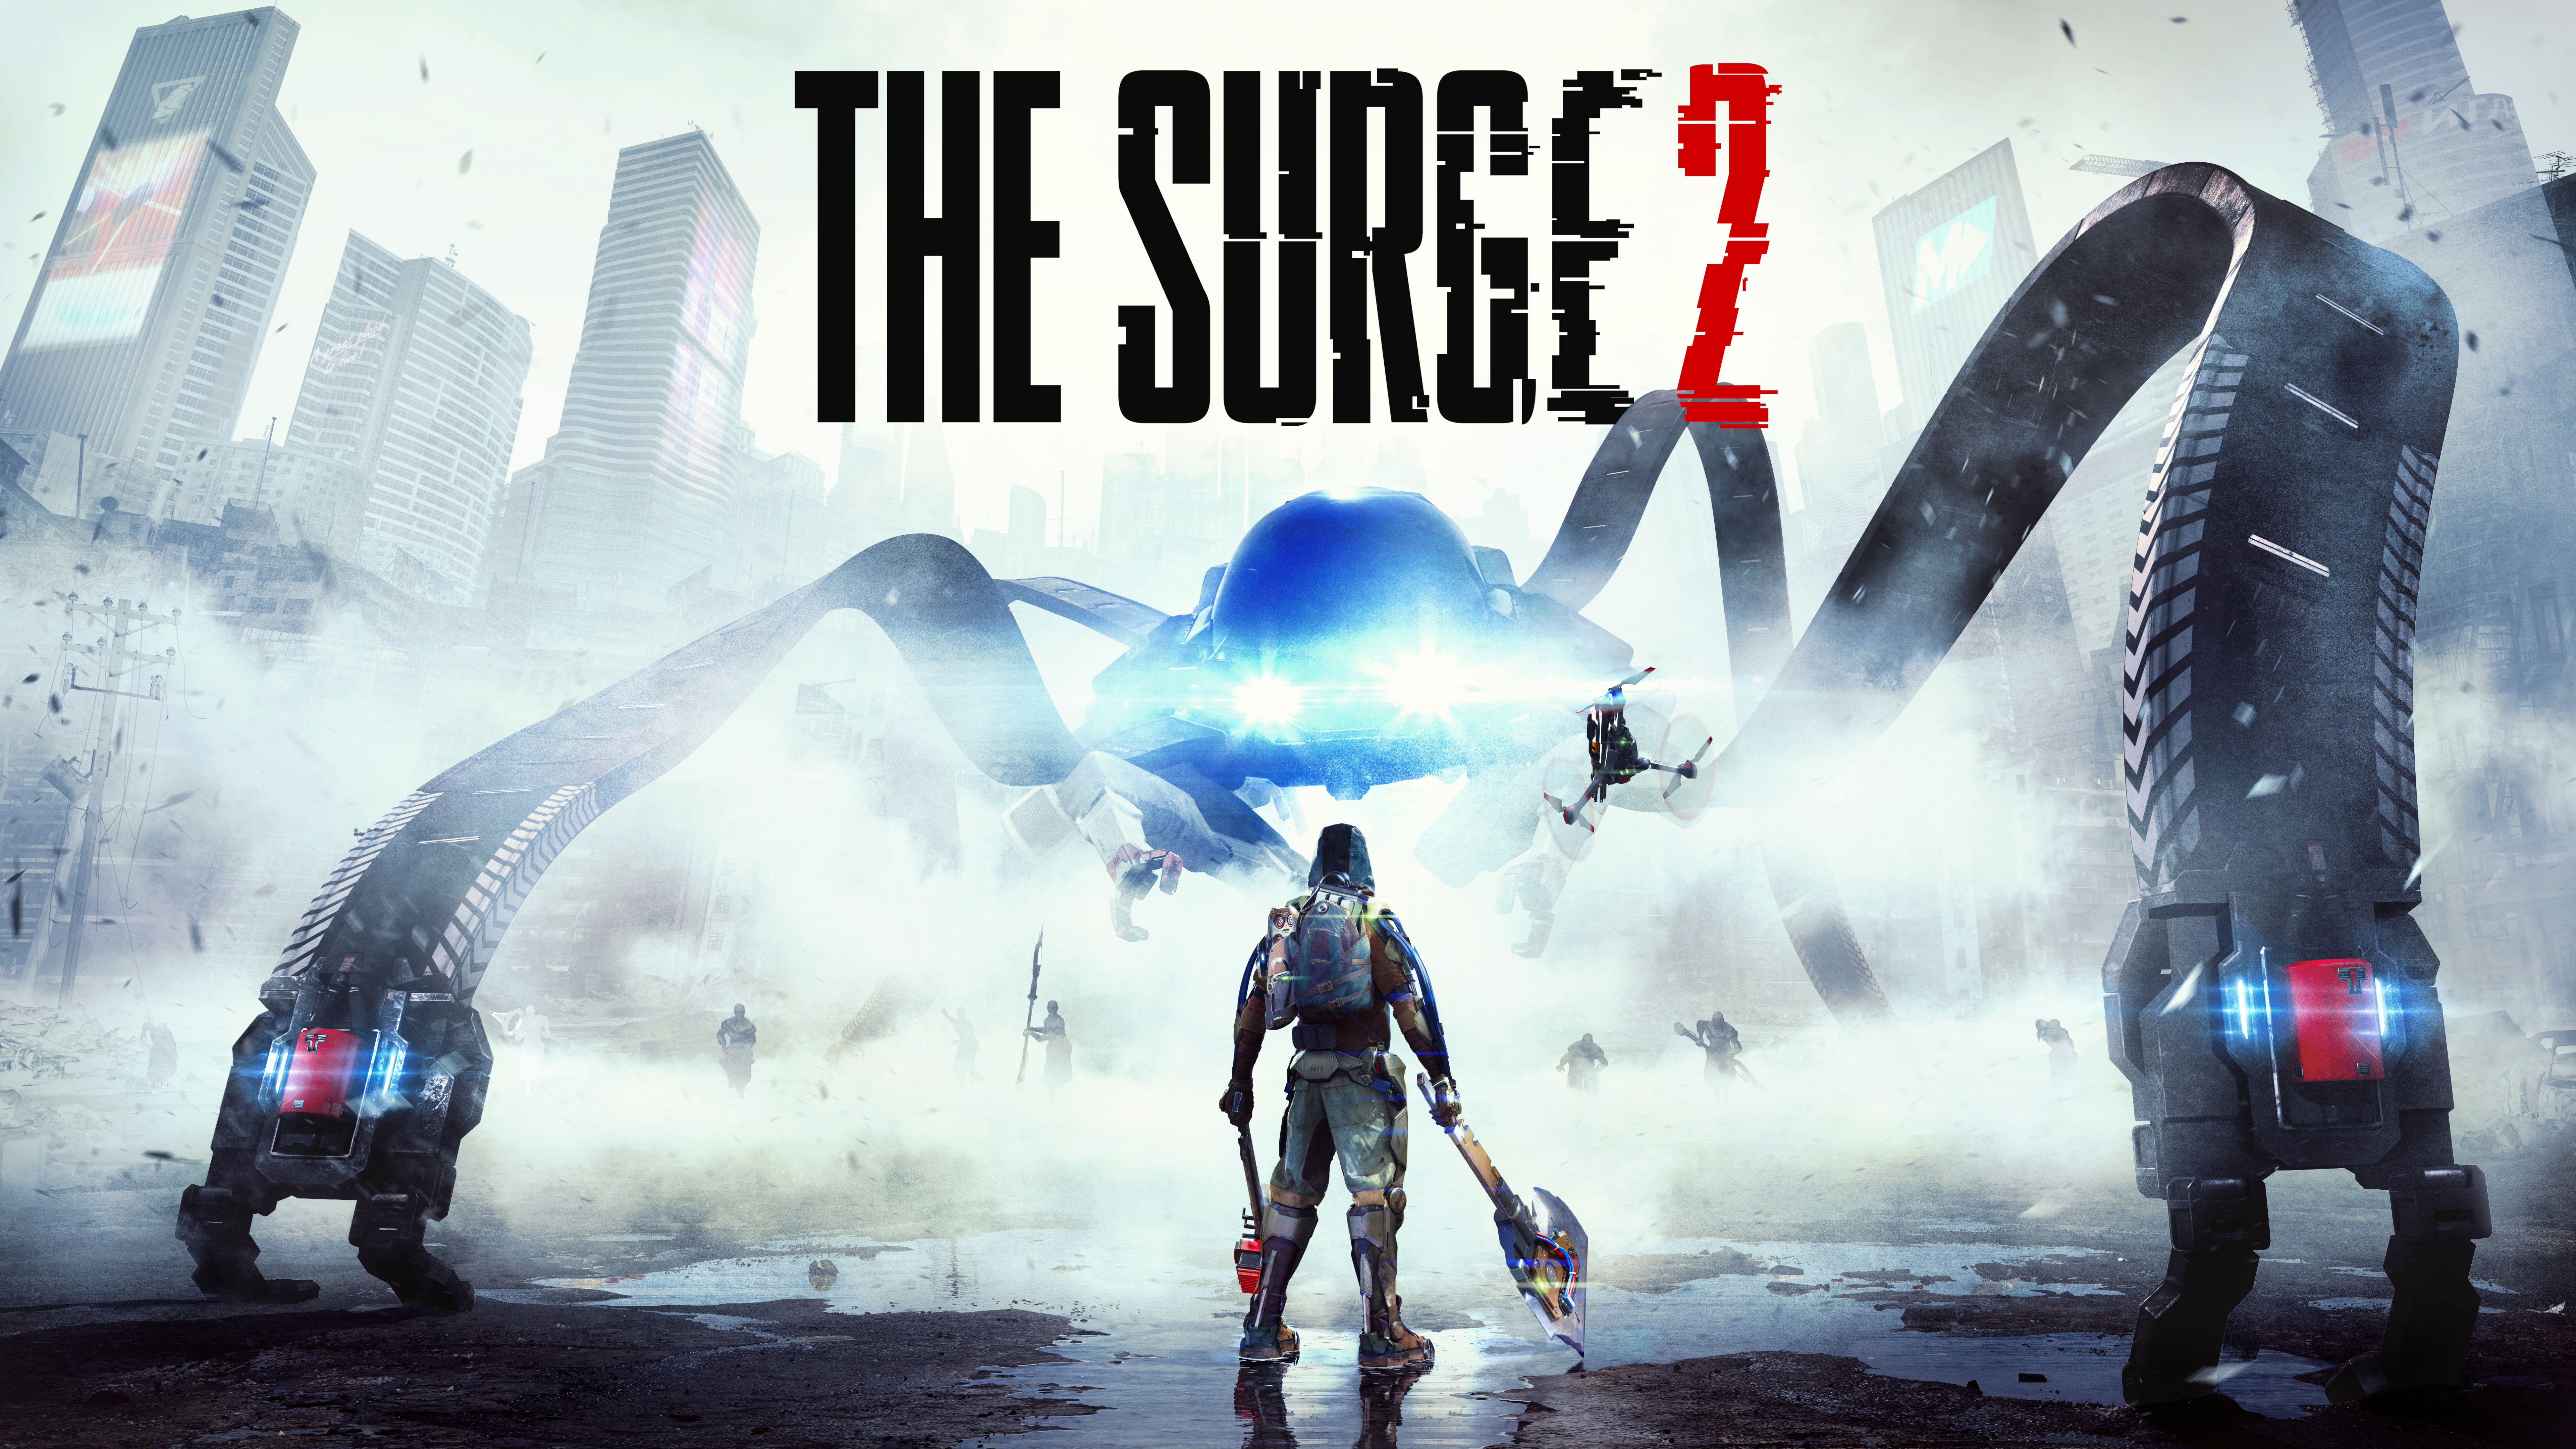 Le Surge 2, Surtension, Pont 13, Focus Accueil Interactif, Playstation 4. Wallpaper in 7680x4320 Resolution